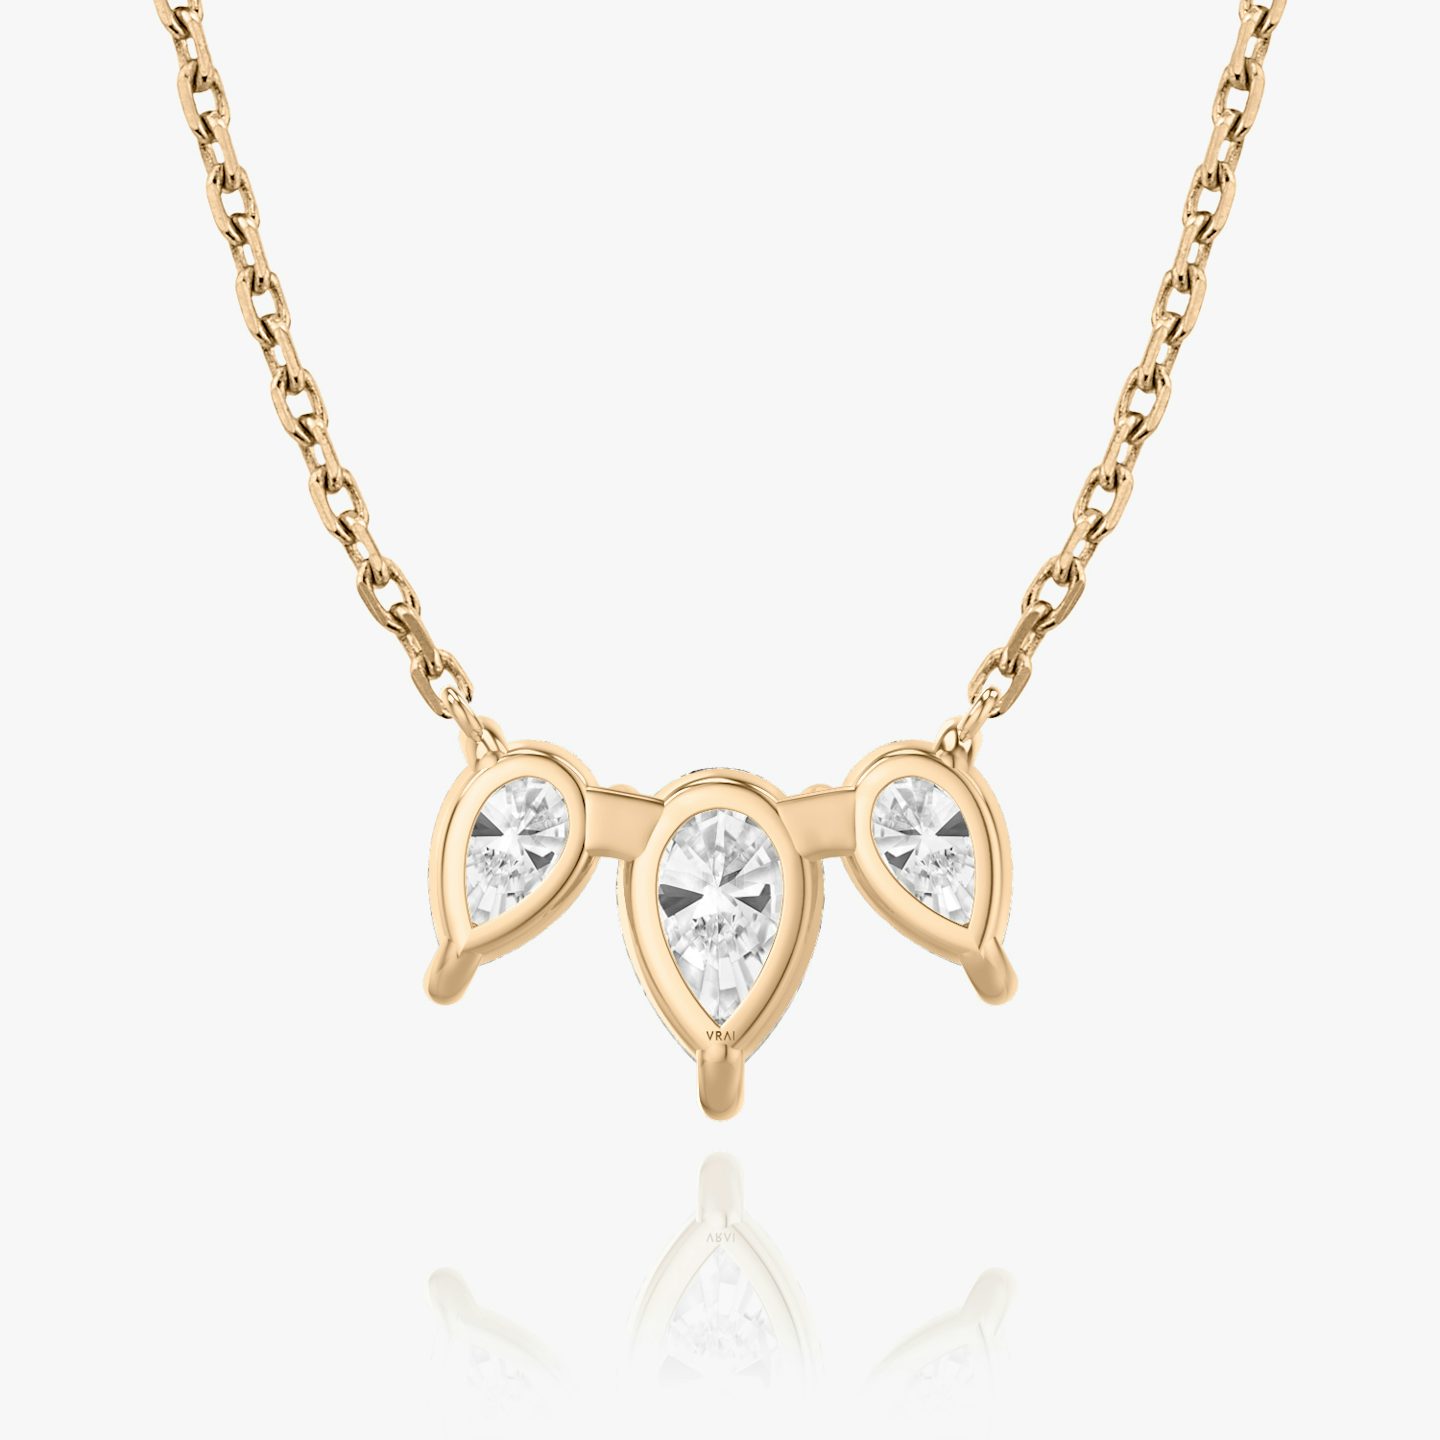 Arc Necklace | Pear | 14k | Rose Gold | diamondCount: 3 | diamondSize: large | chainLength: 16-18